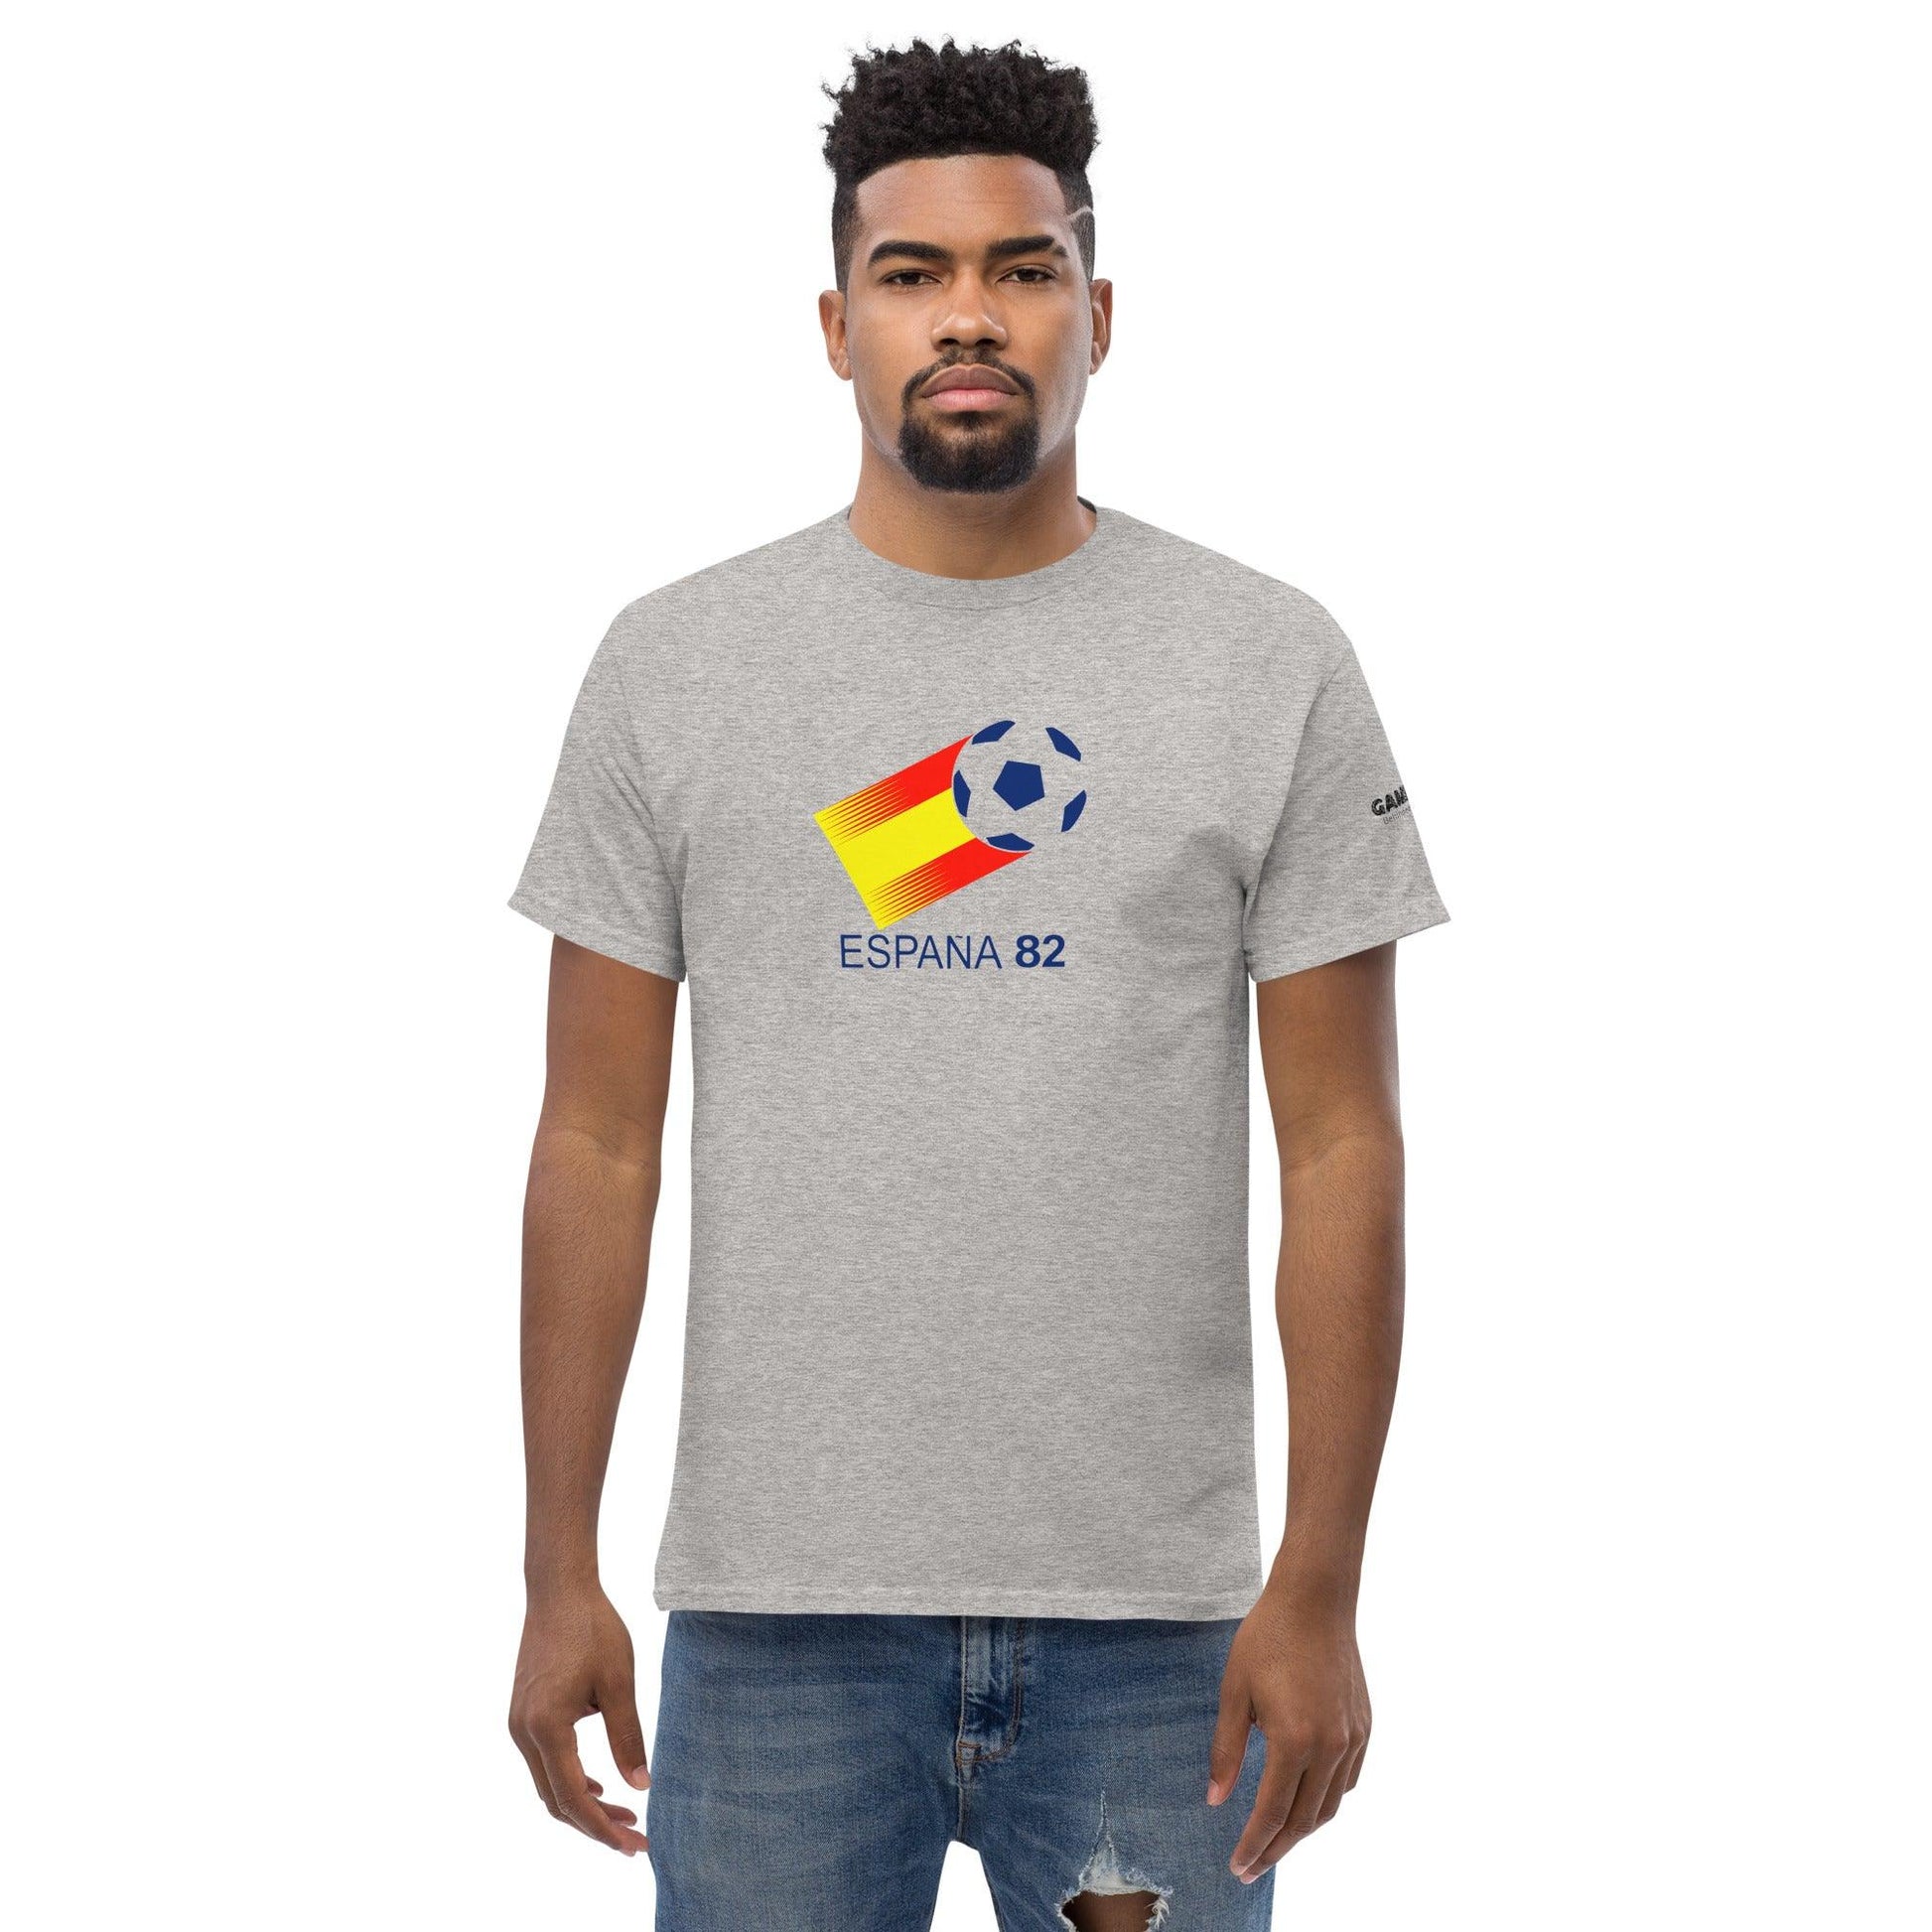 Espana World Cup 82 t-shirt by game yarns